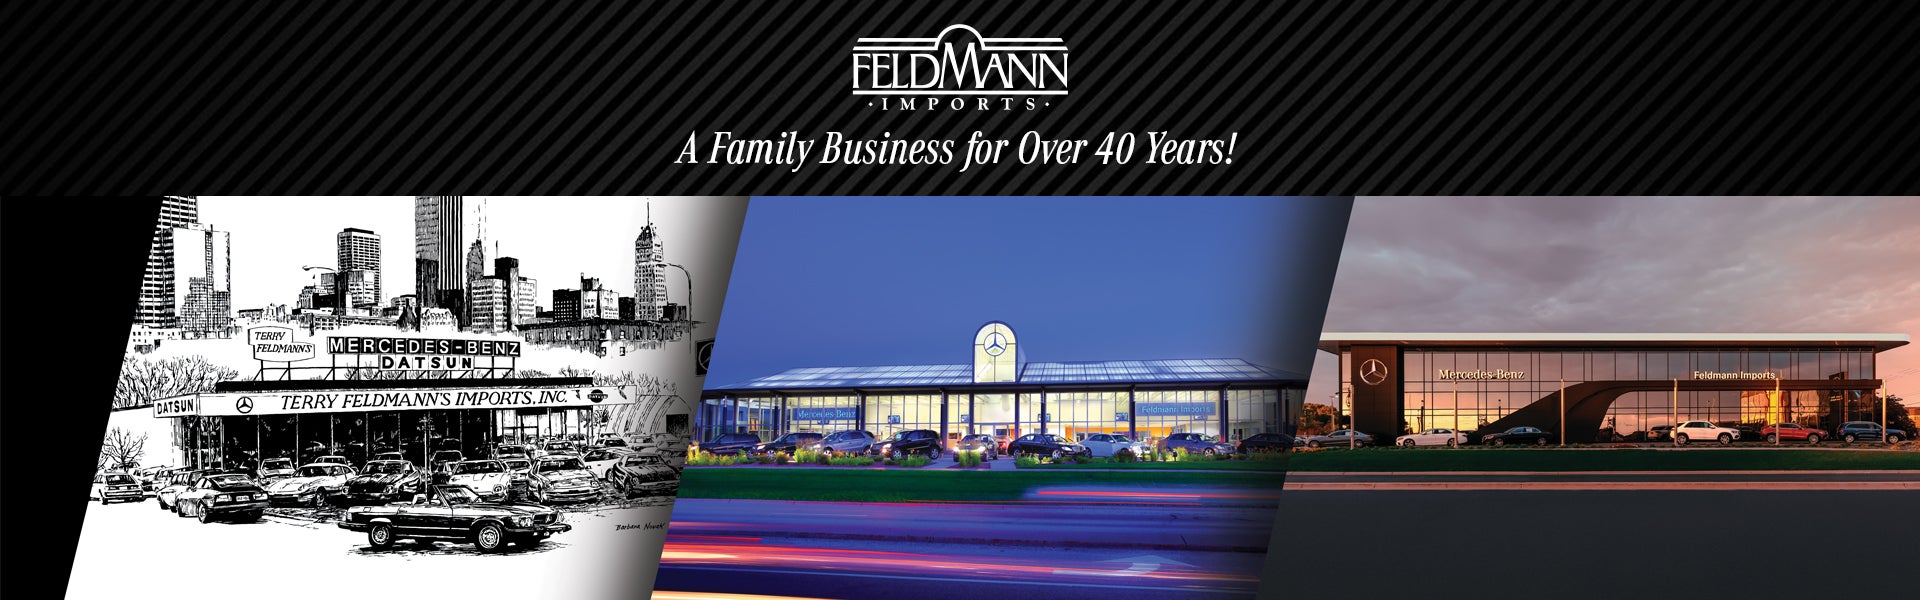 Feldmann Imports Mercedes-Benz family dealership for over 40 years in Bloomington, Minnesota